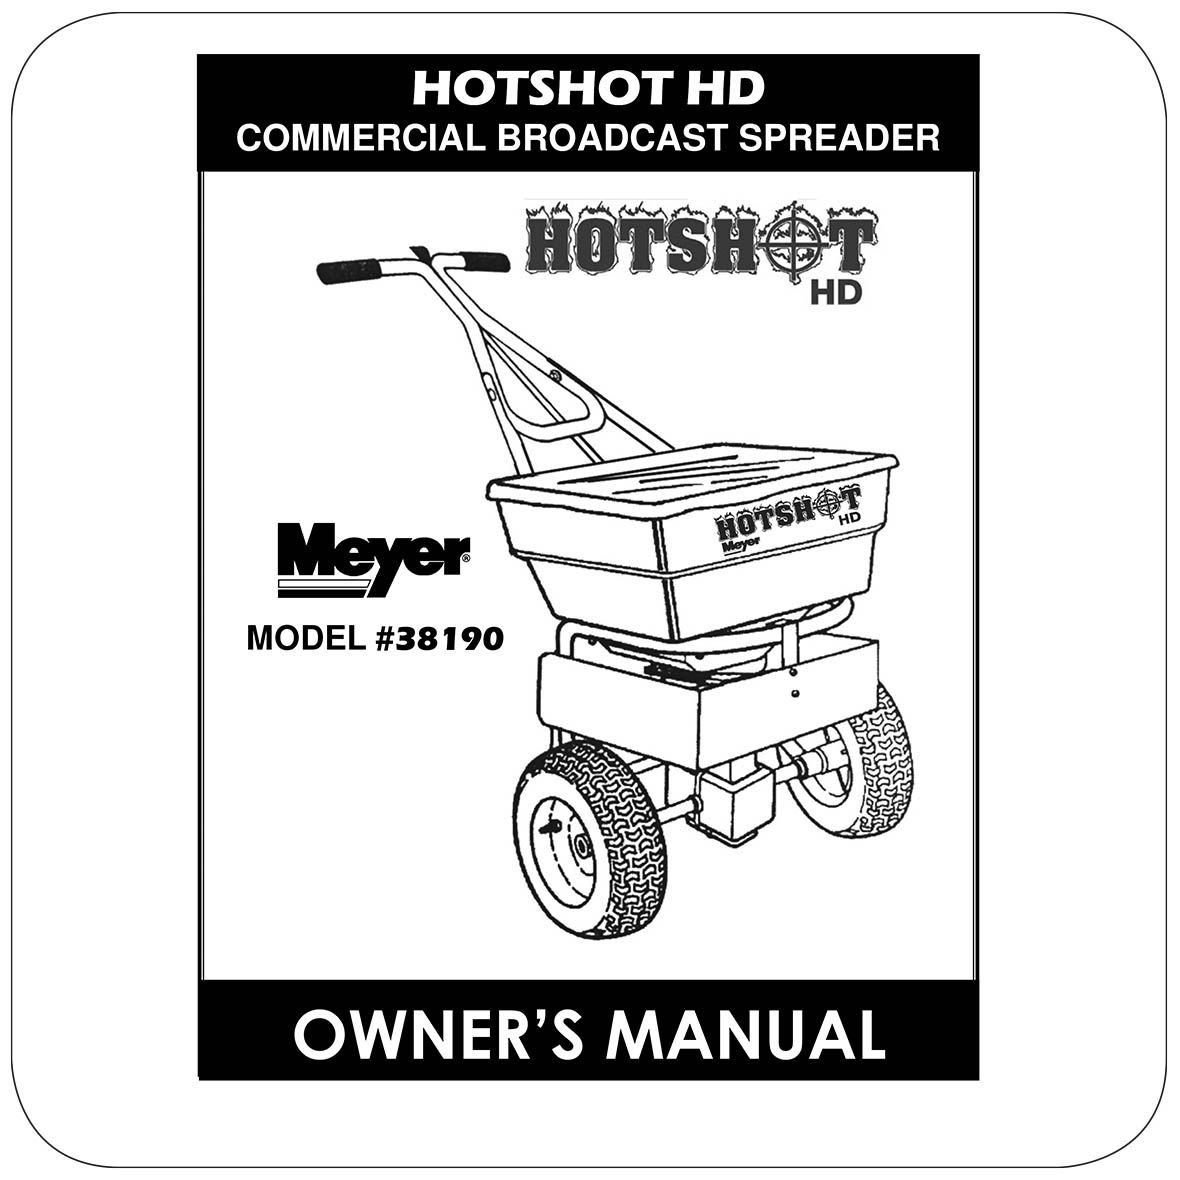 Owners Manual HotShot 100HD - 38190